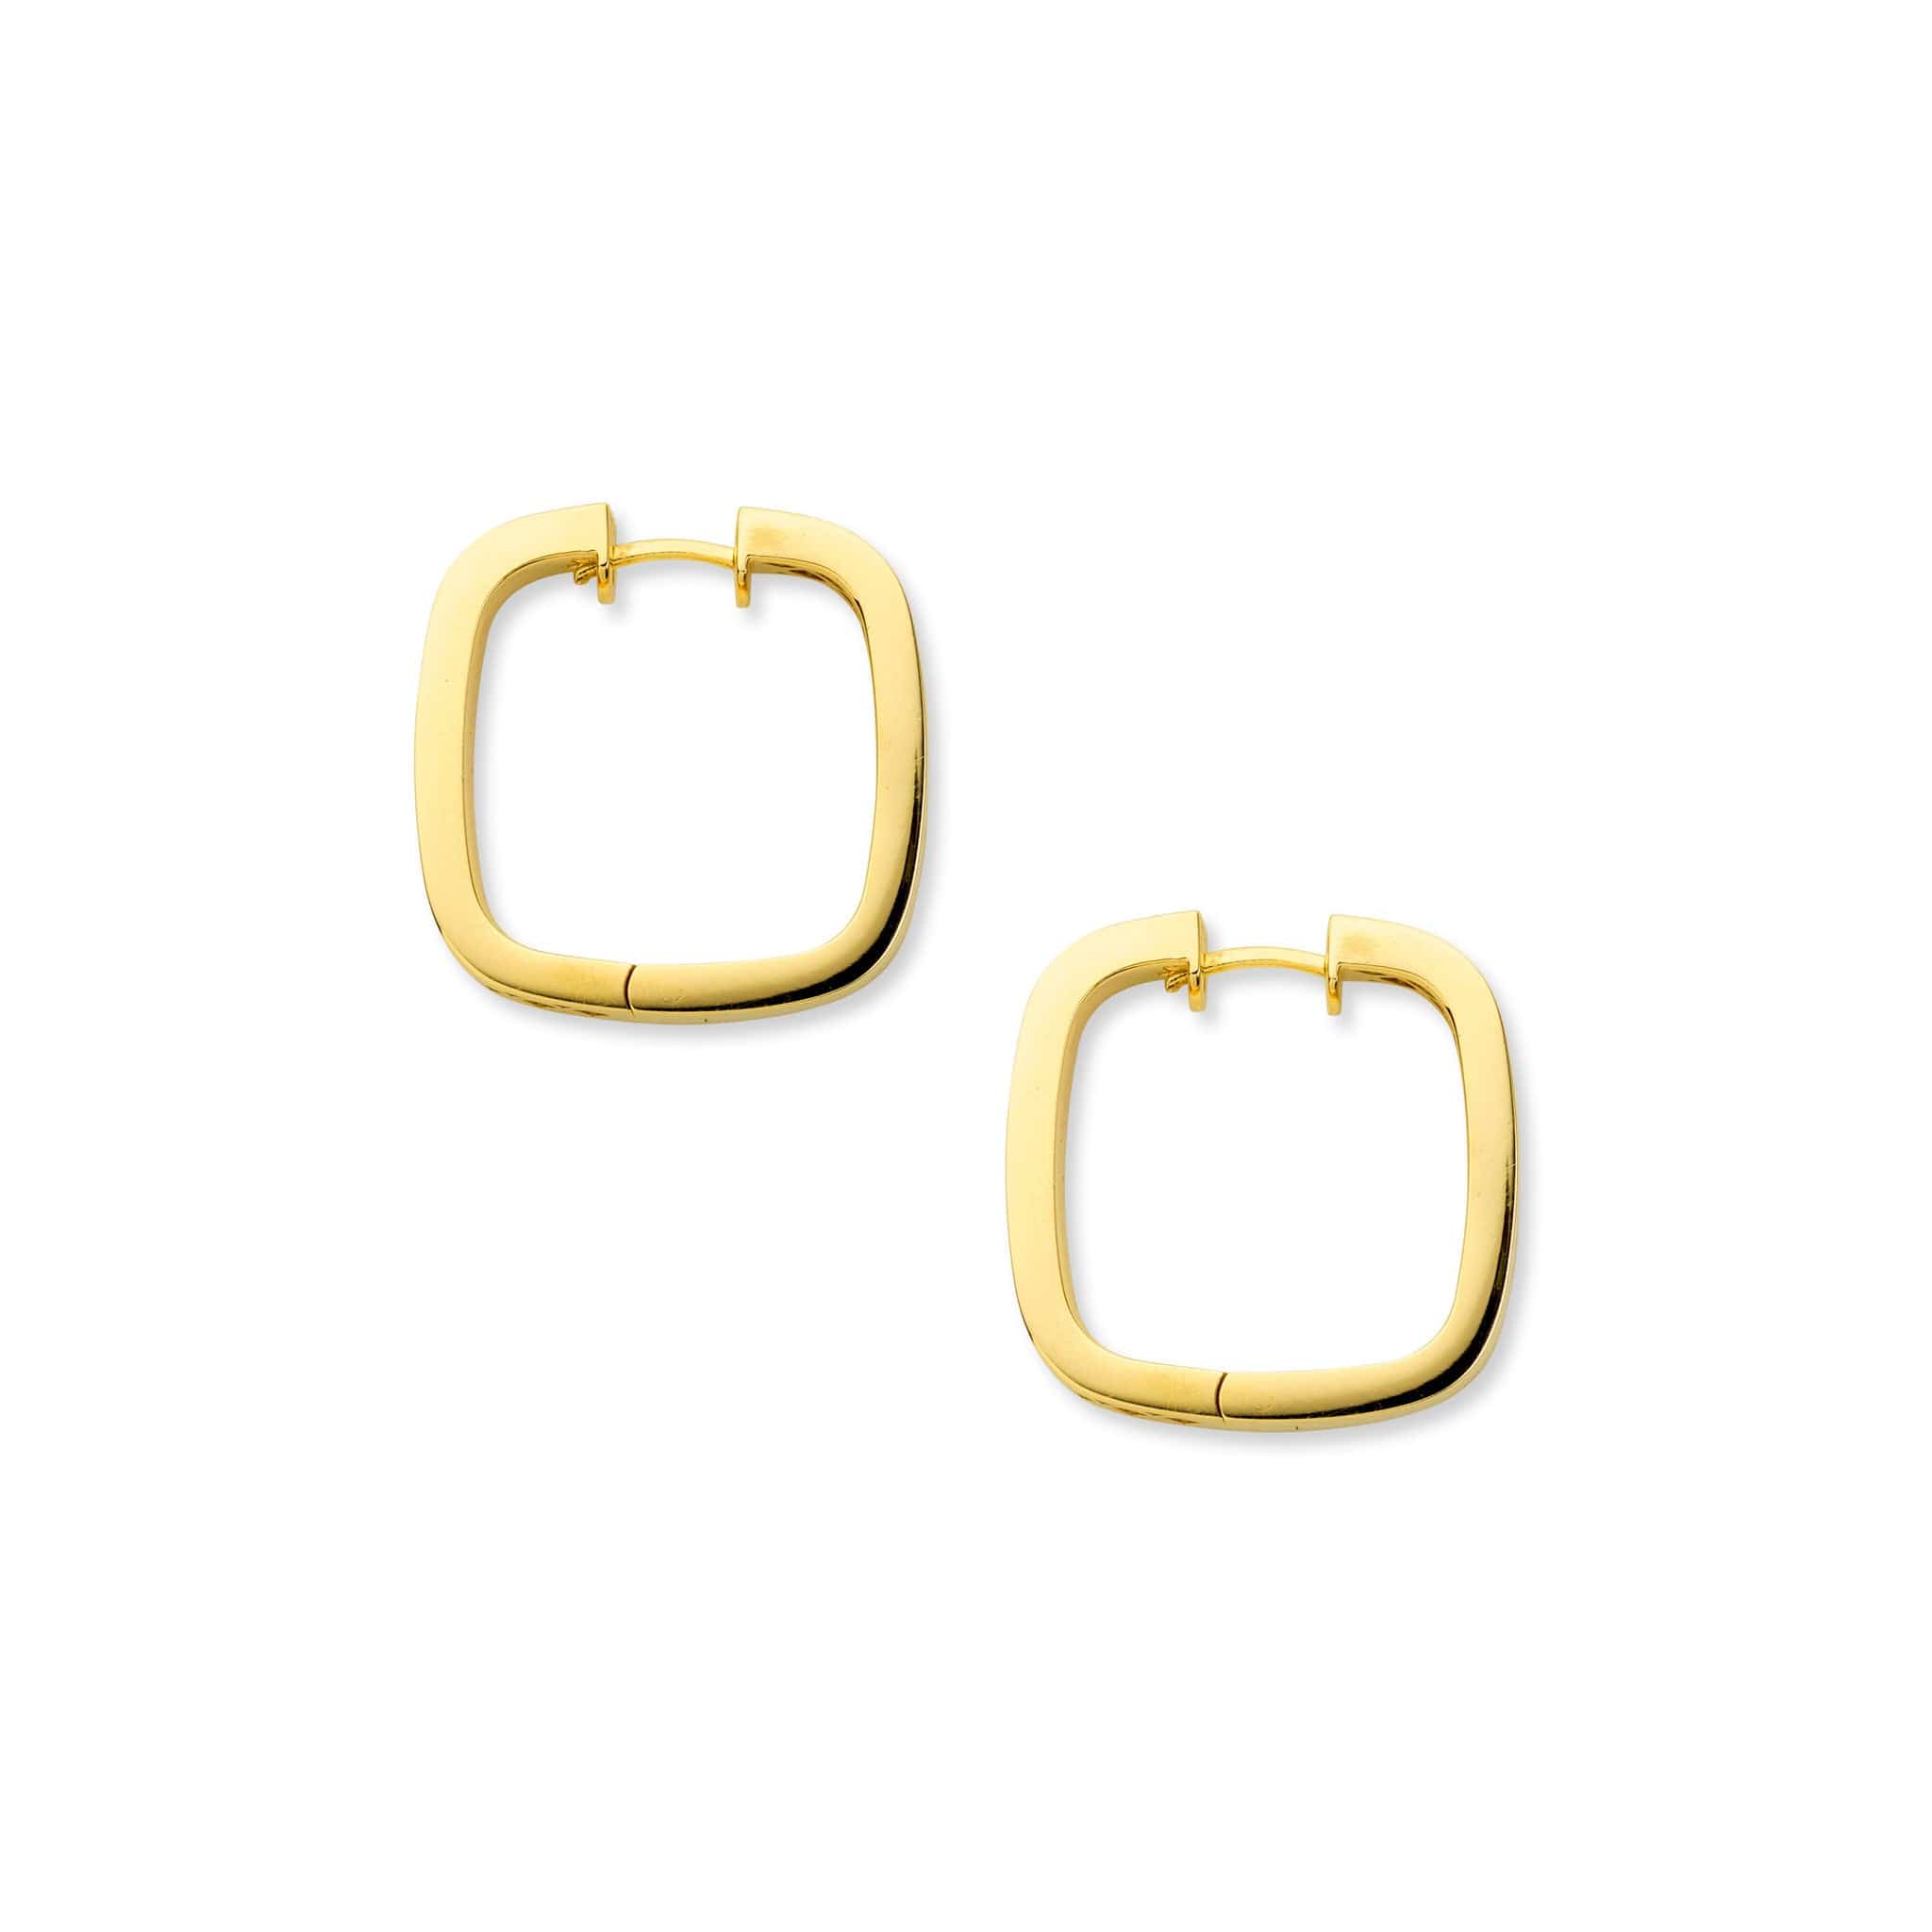 Gold square hoop earrings laid flat.